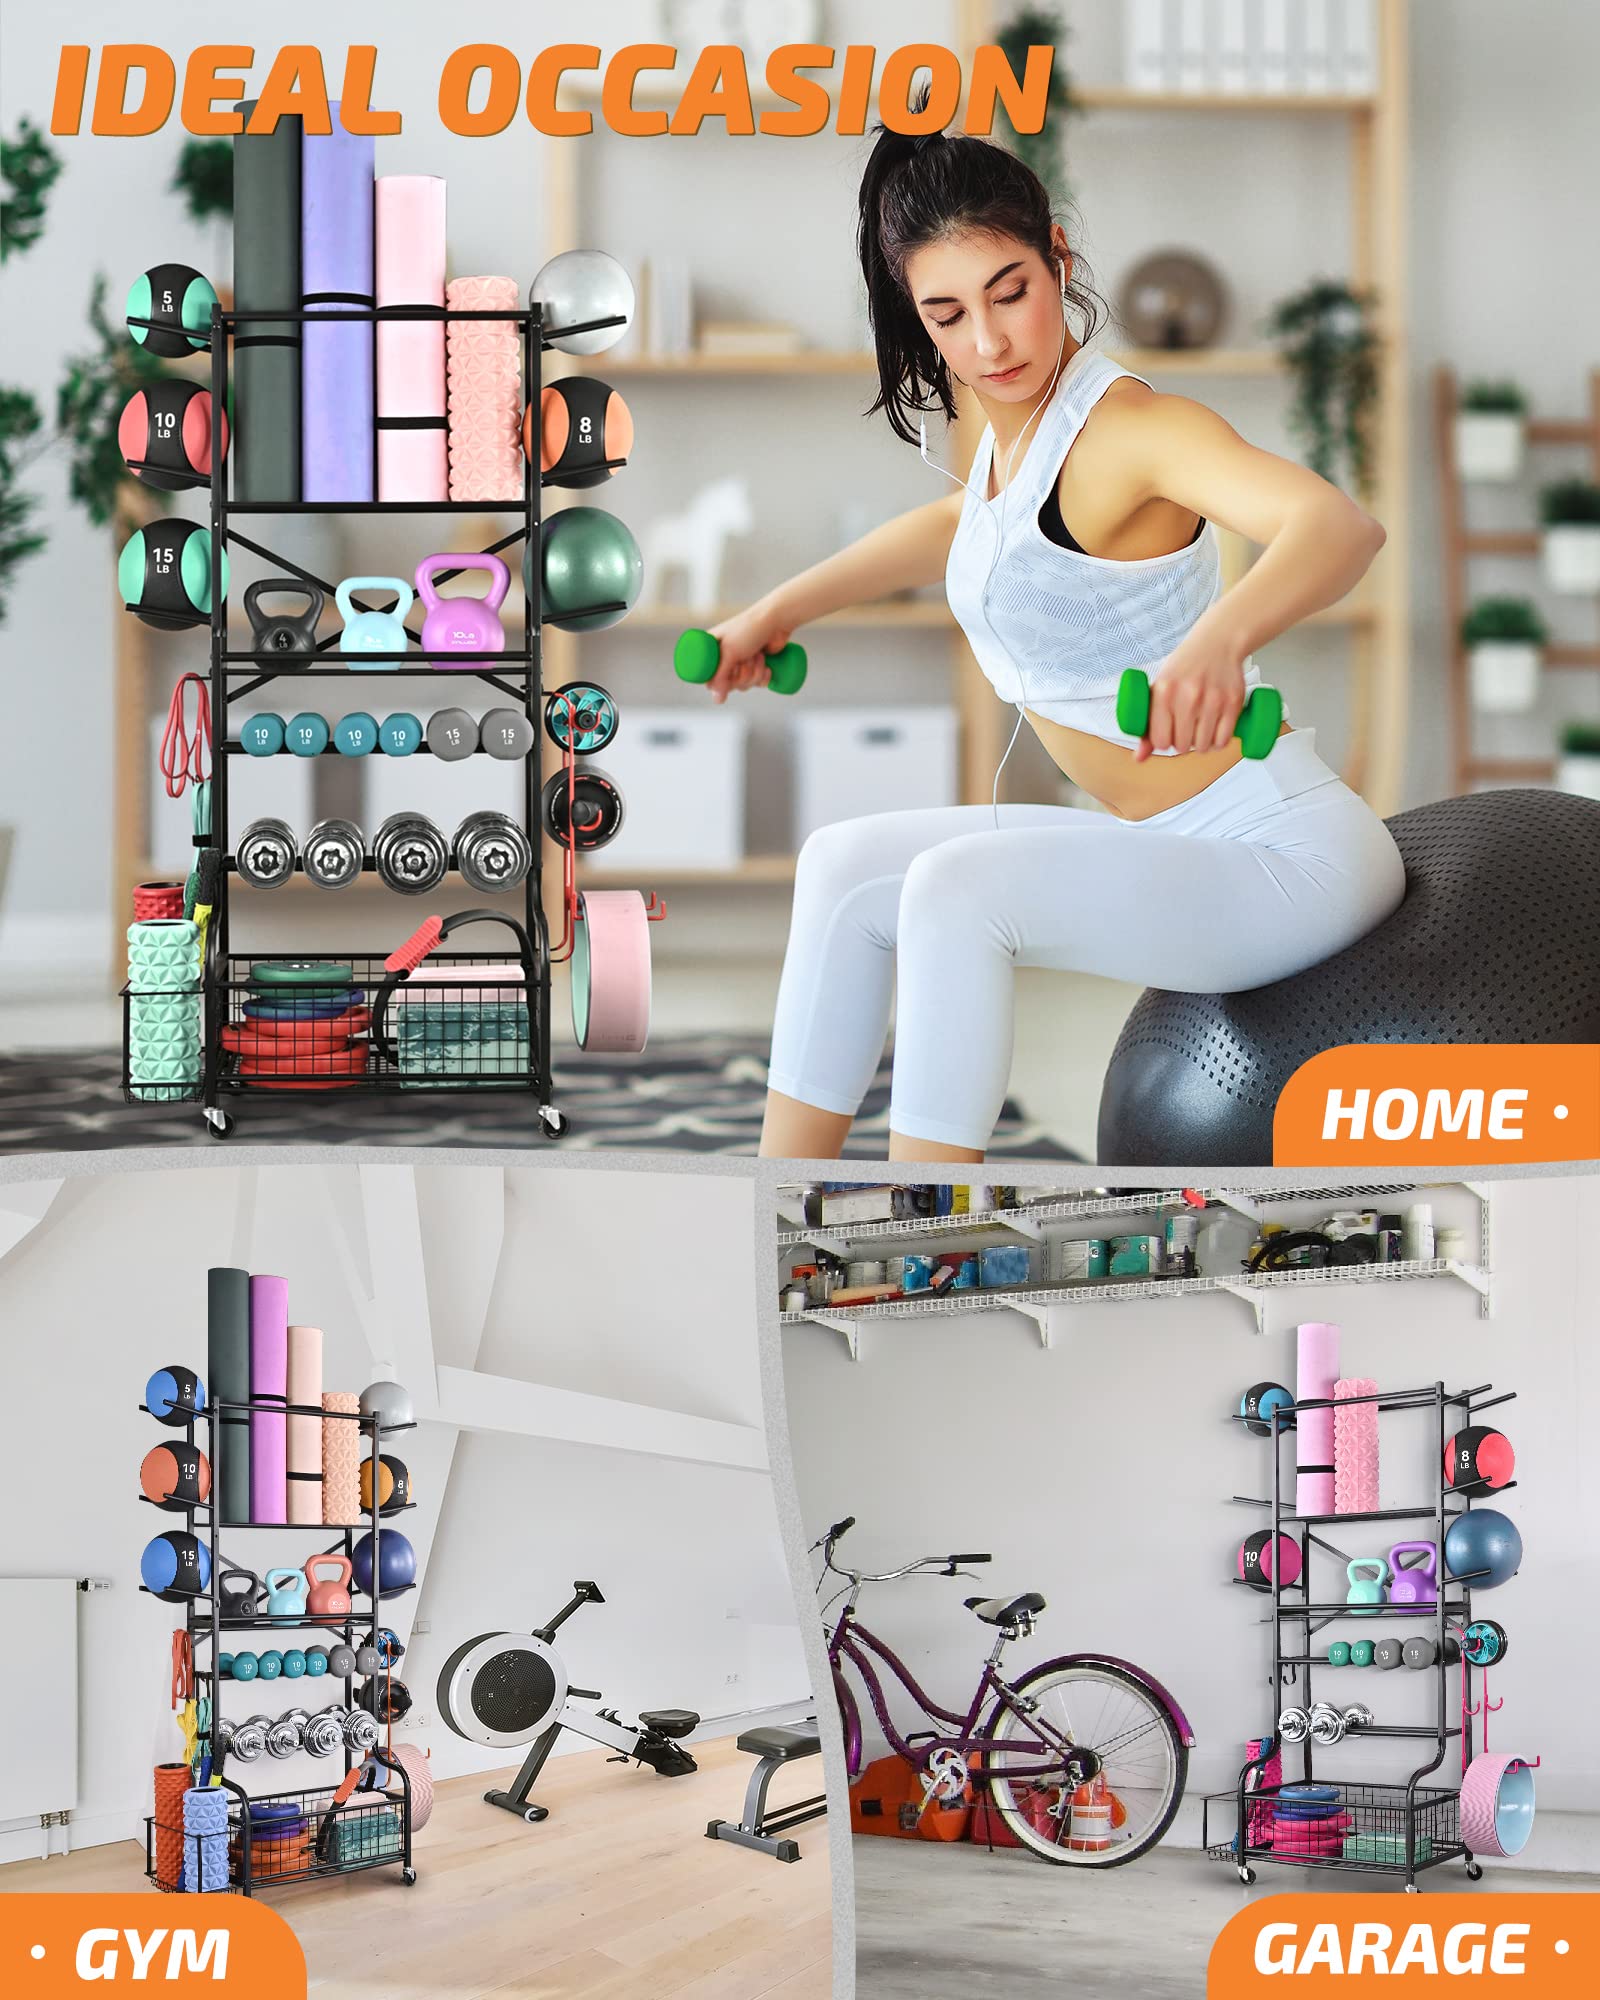 PLKOW Yoga Mat Storage Rack, Home Gym Storage Rack for Yoga Mat, Foam